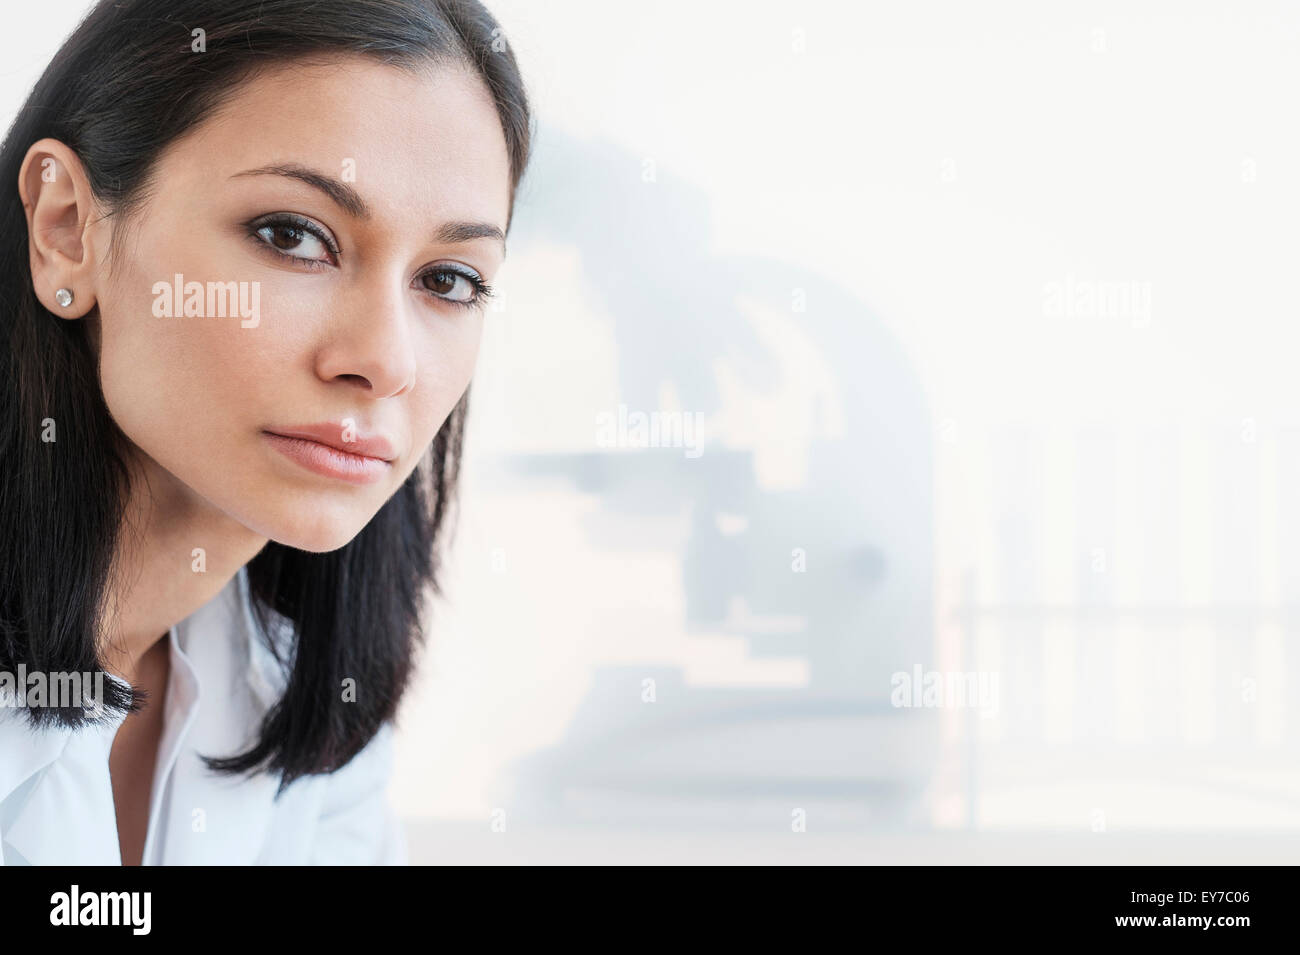 Woman in laboratory Stock Photo